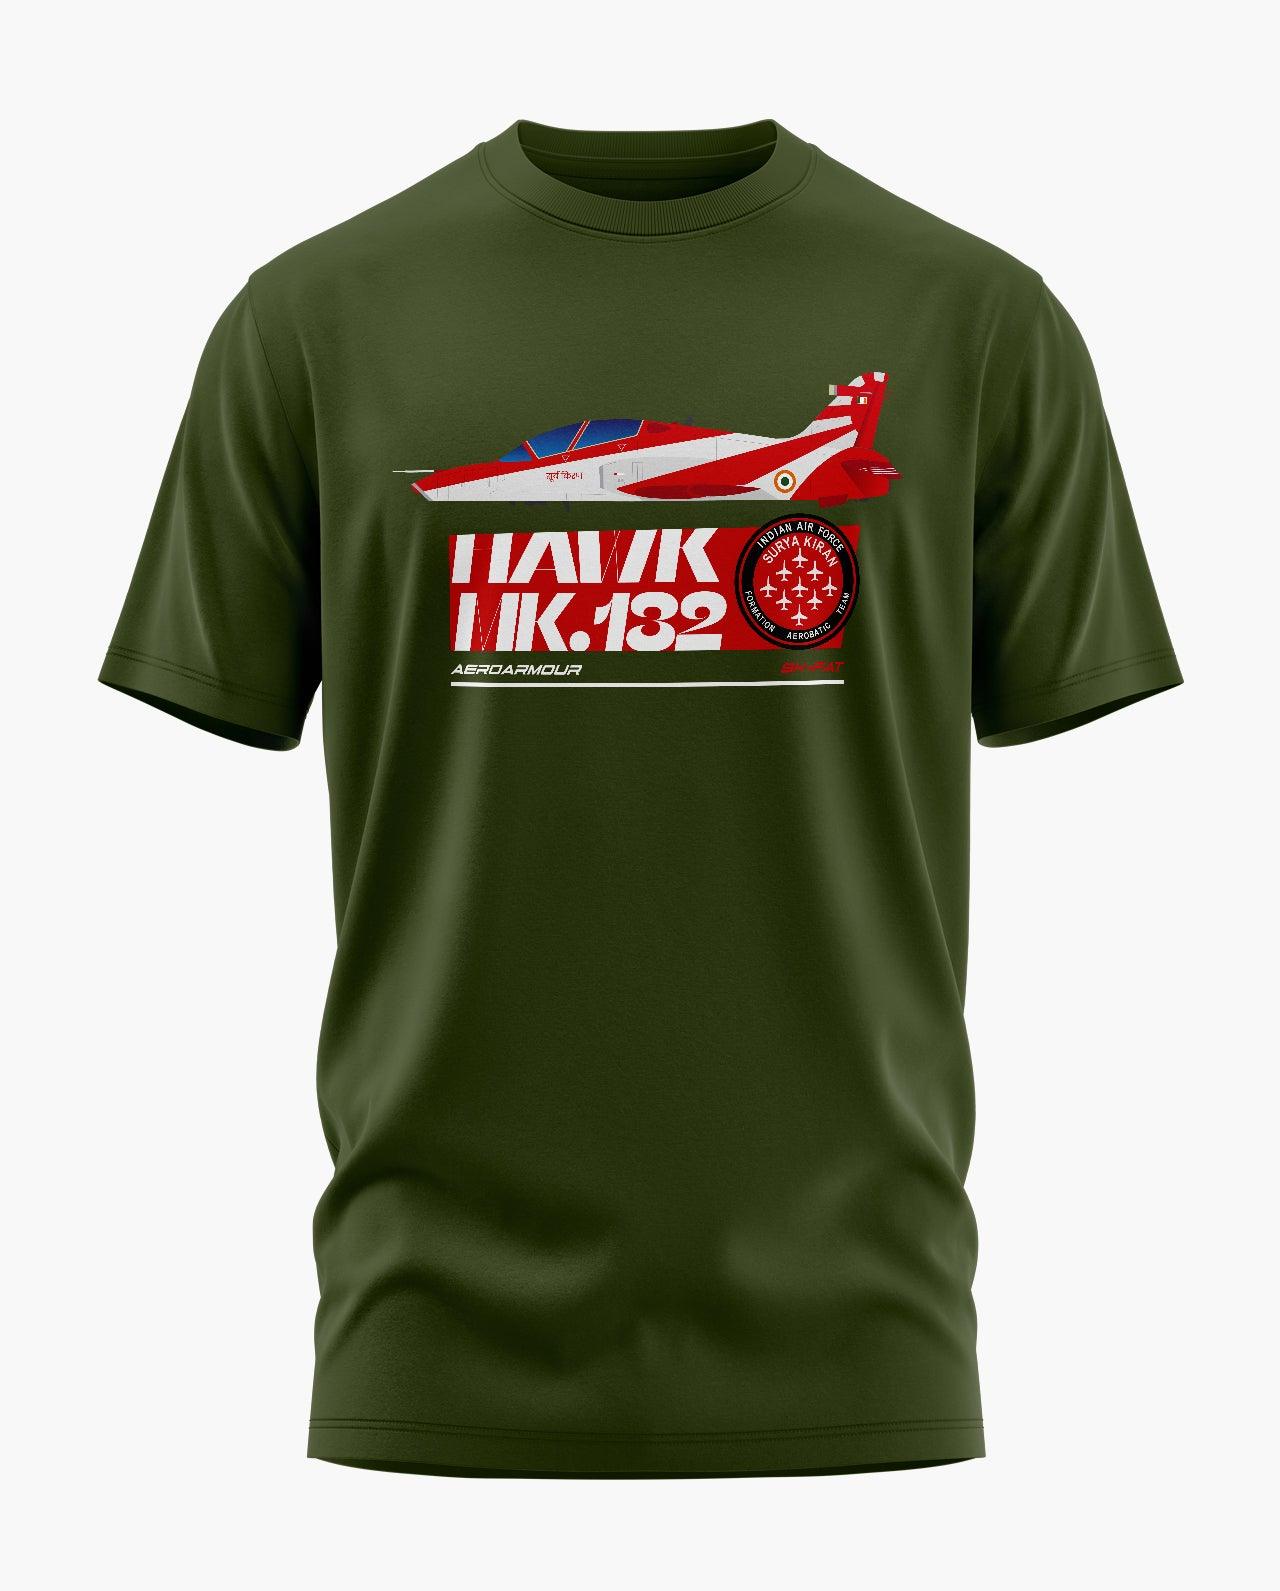 Surya Kiran T-Shirt - Aero Armour